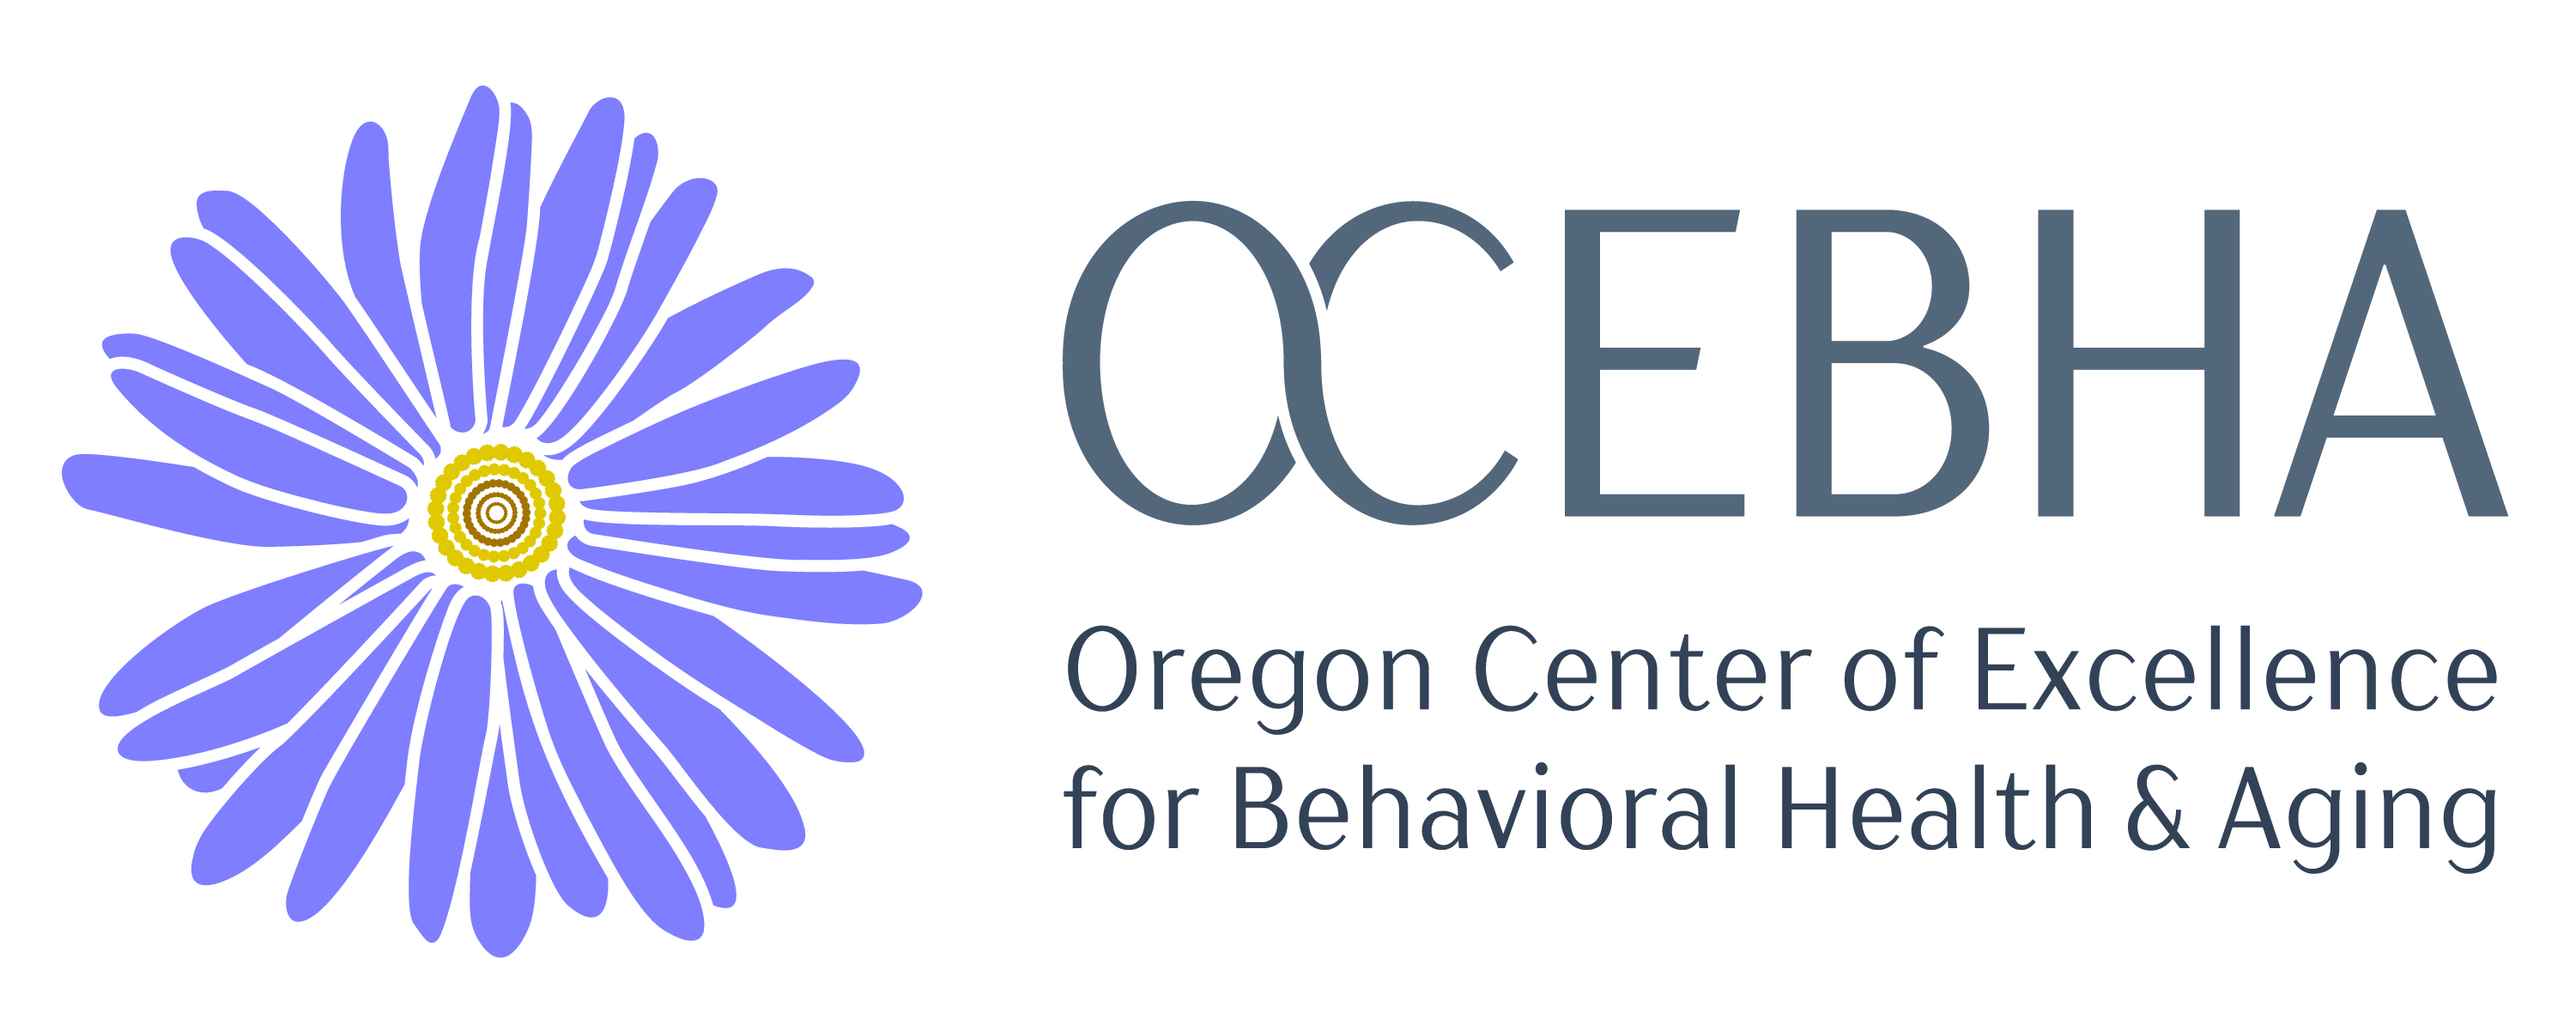 Oregon Center of Excellence for Behavioral Health & Aging